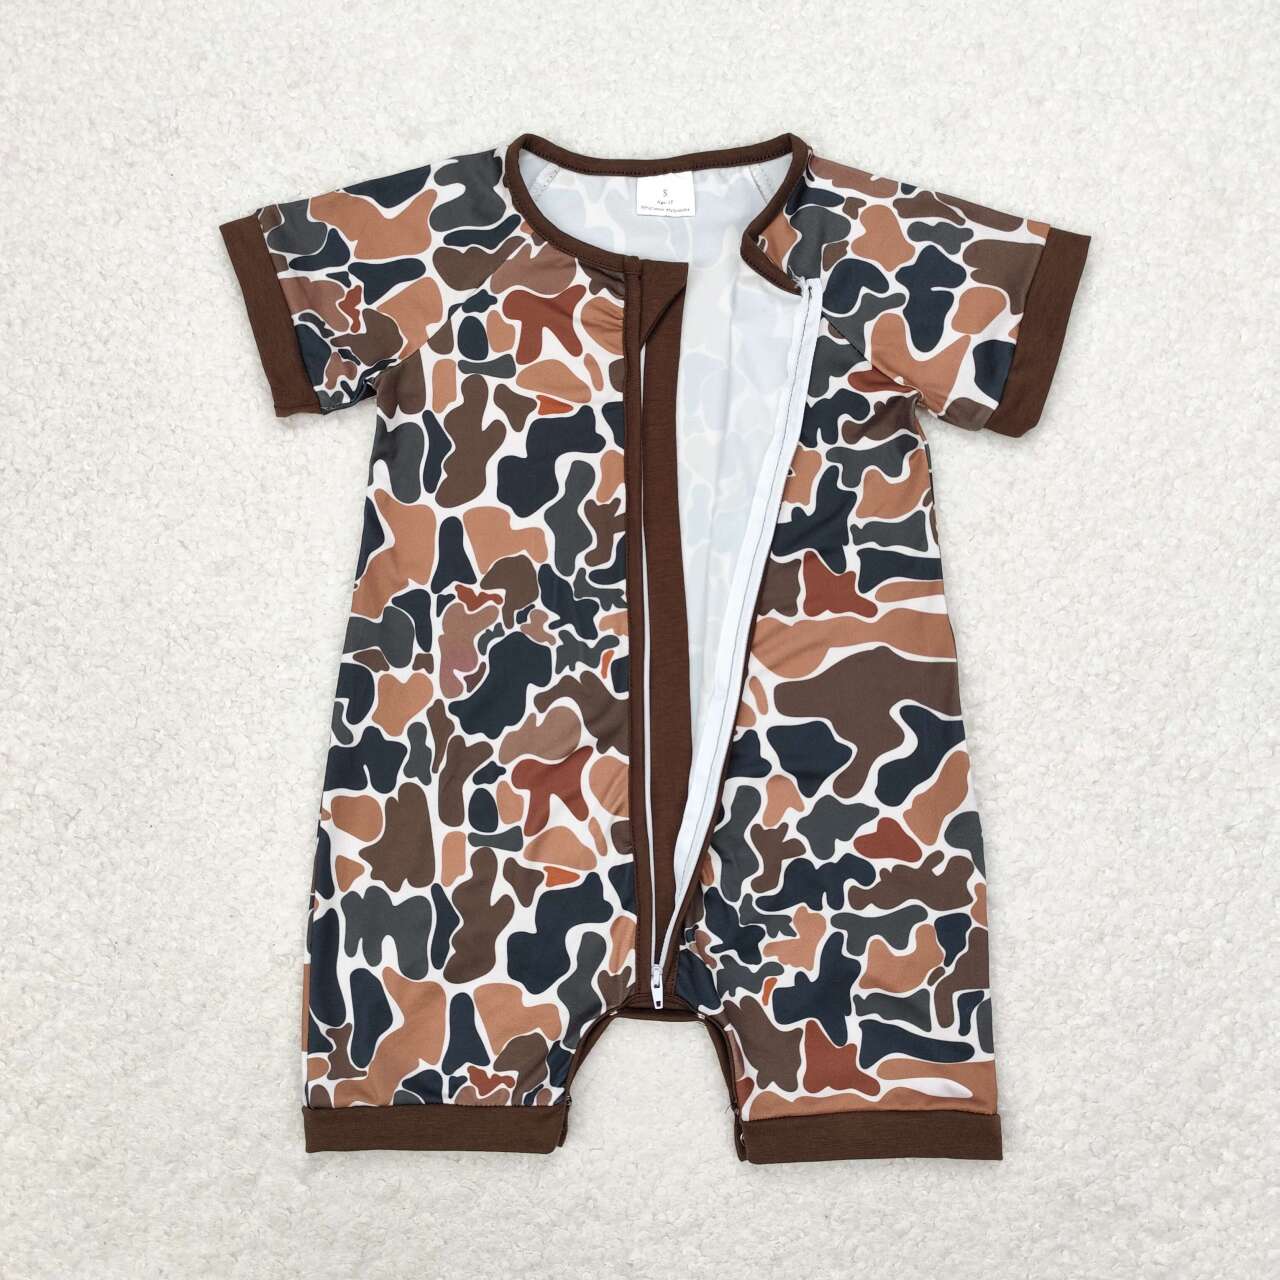 brown Camo Print Short Sleeve With Zipper Baby Romper